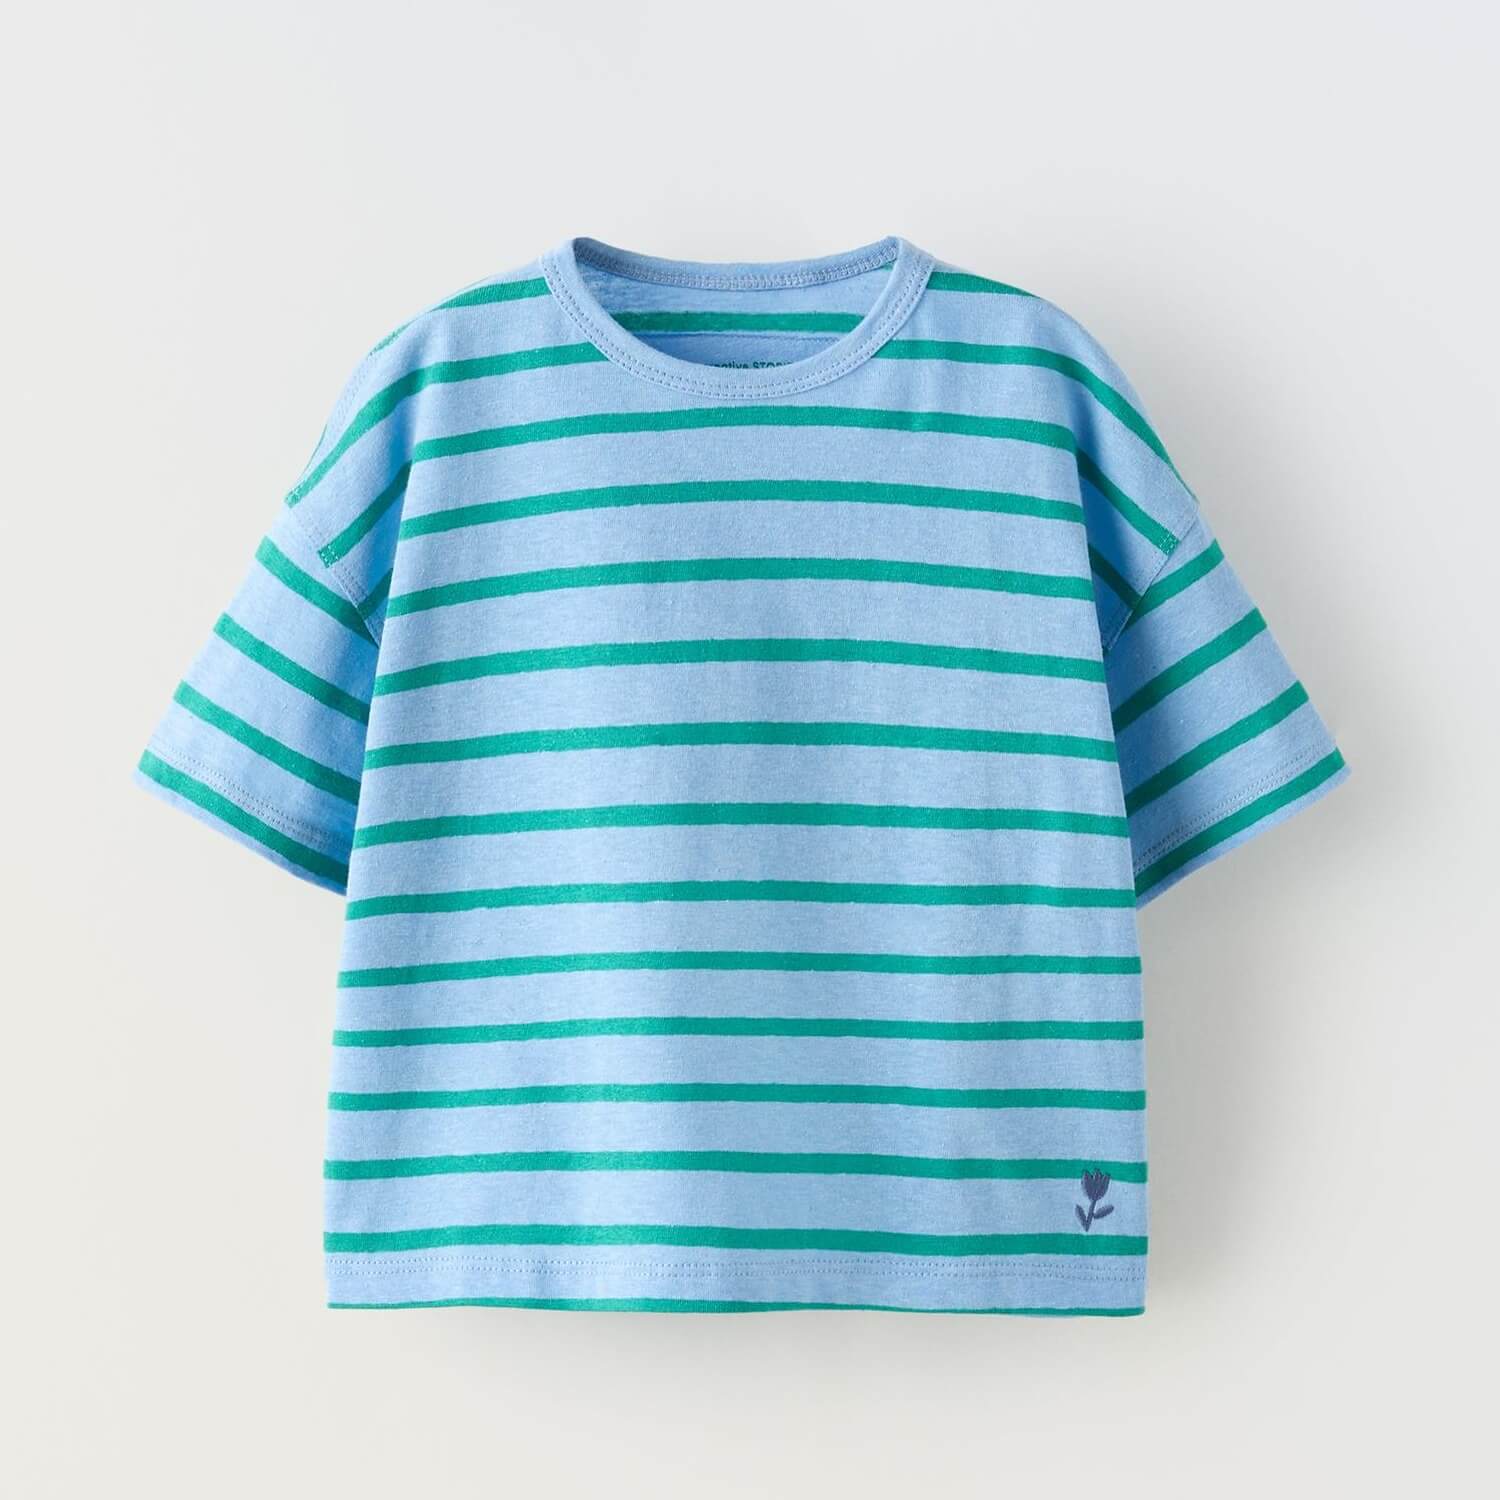 Футболка Zara Woven Striped With Embroidery, голубой/зеленый футболка zara striped with patch белый черный